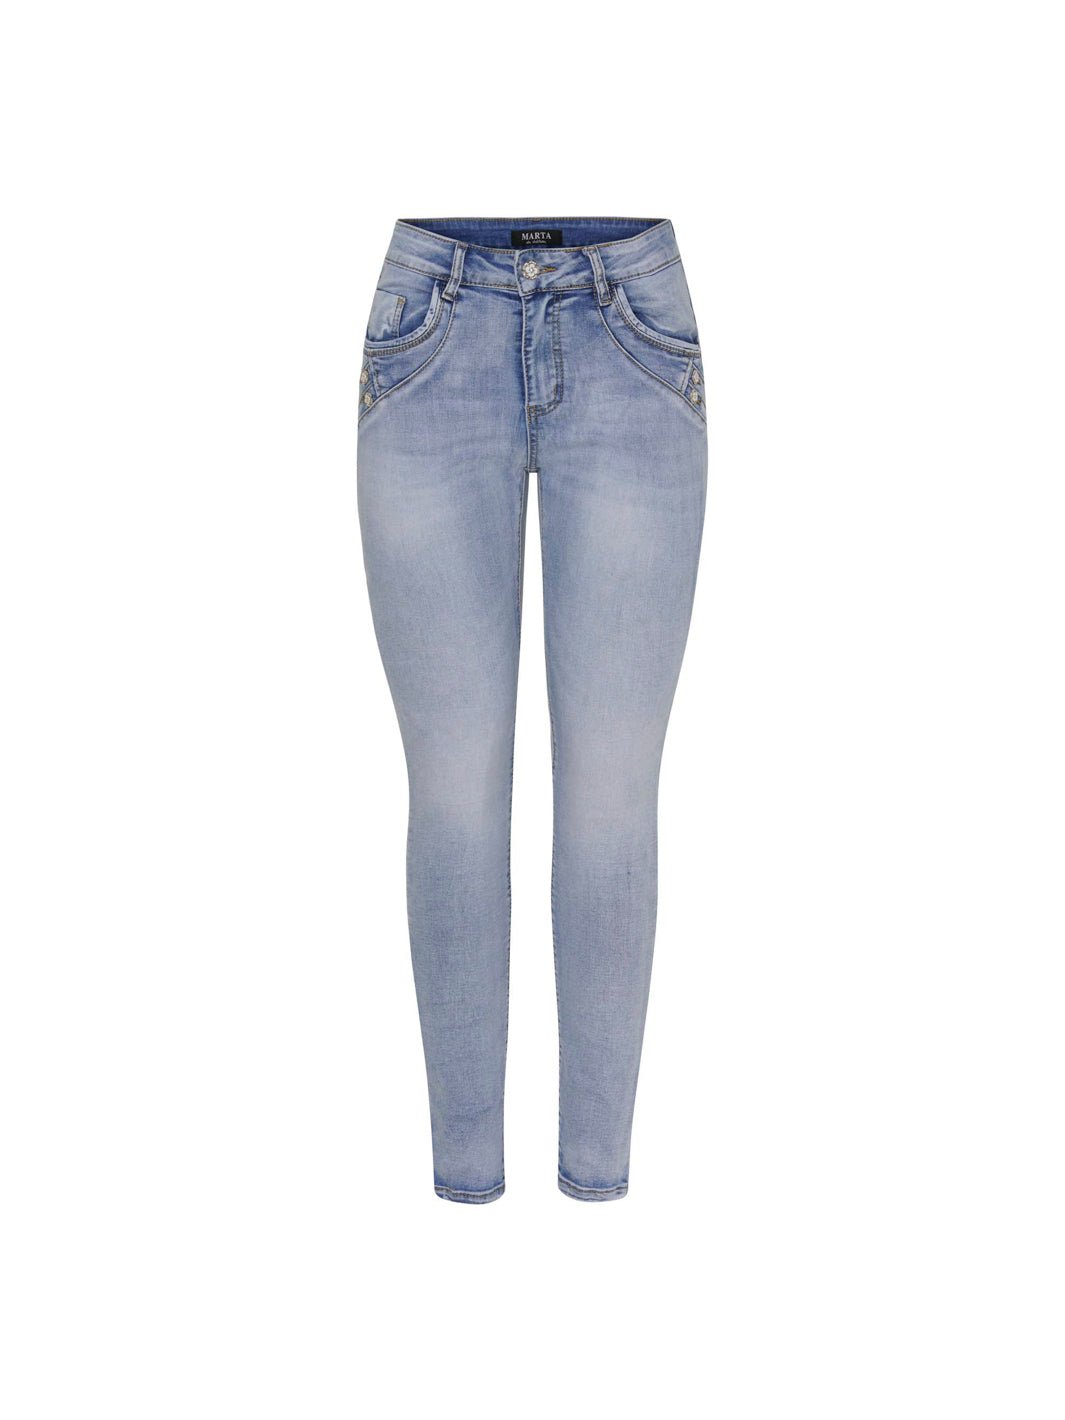 Marta du Chateau Emma 2655 jeans denim blue - Online-Mode